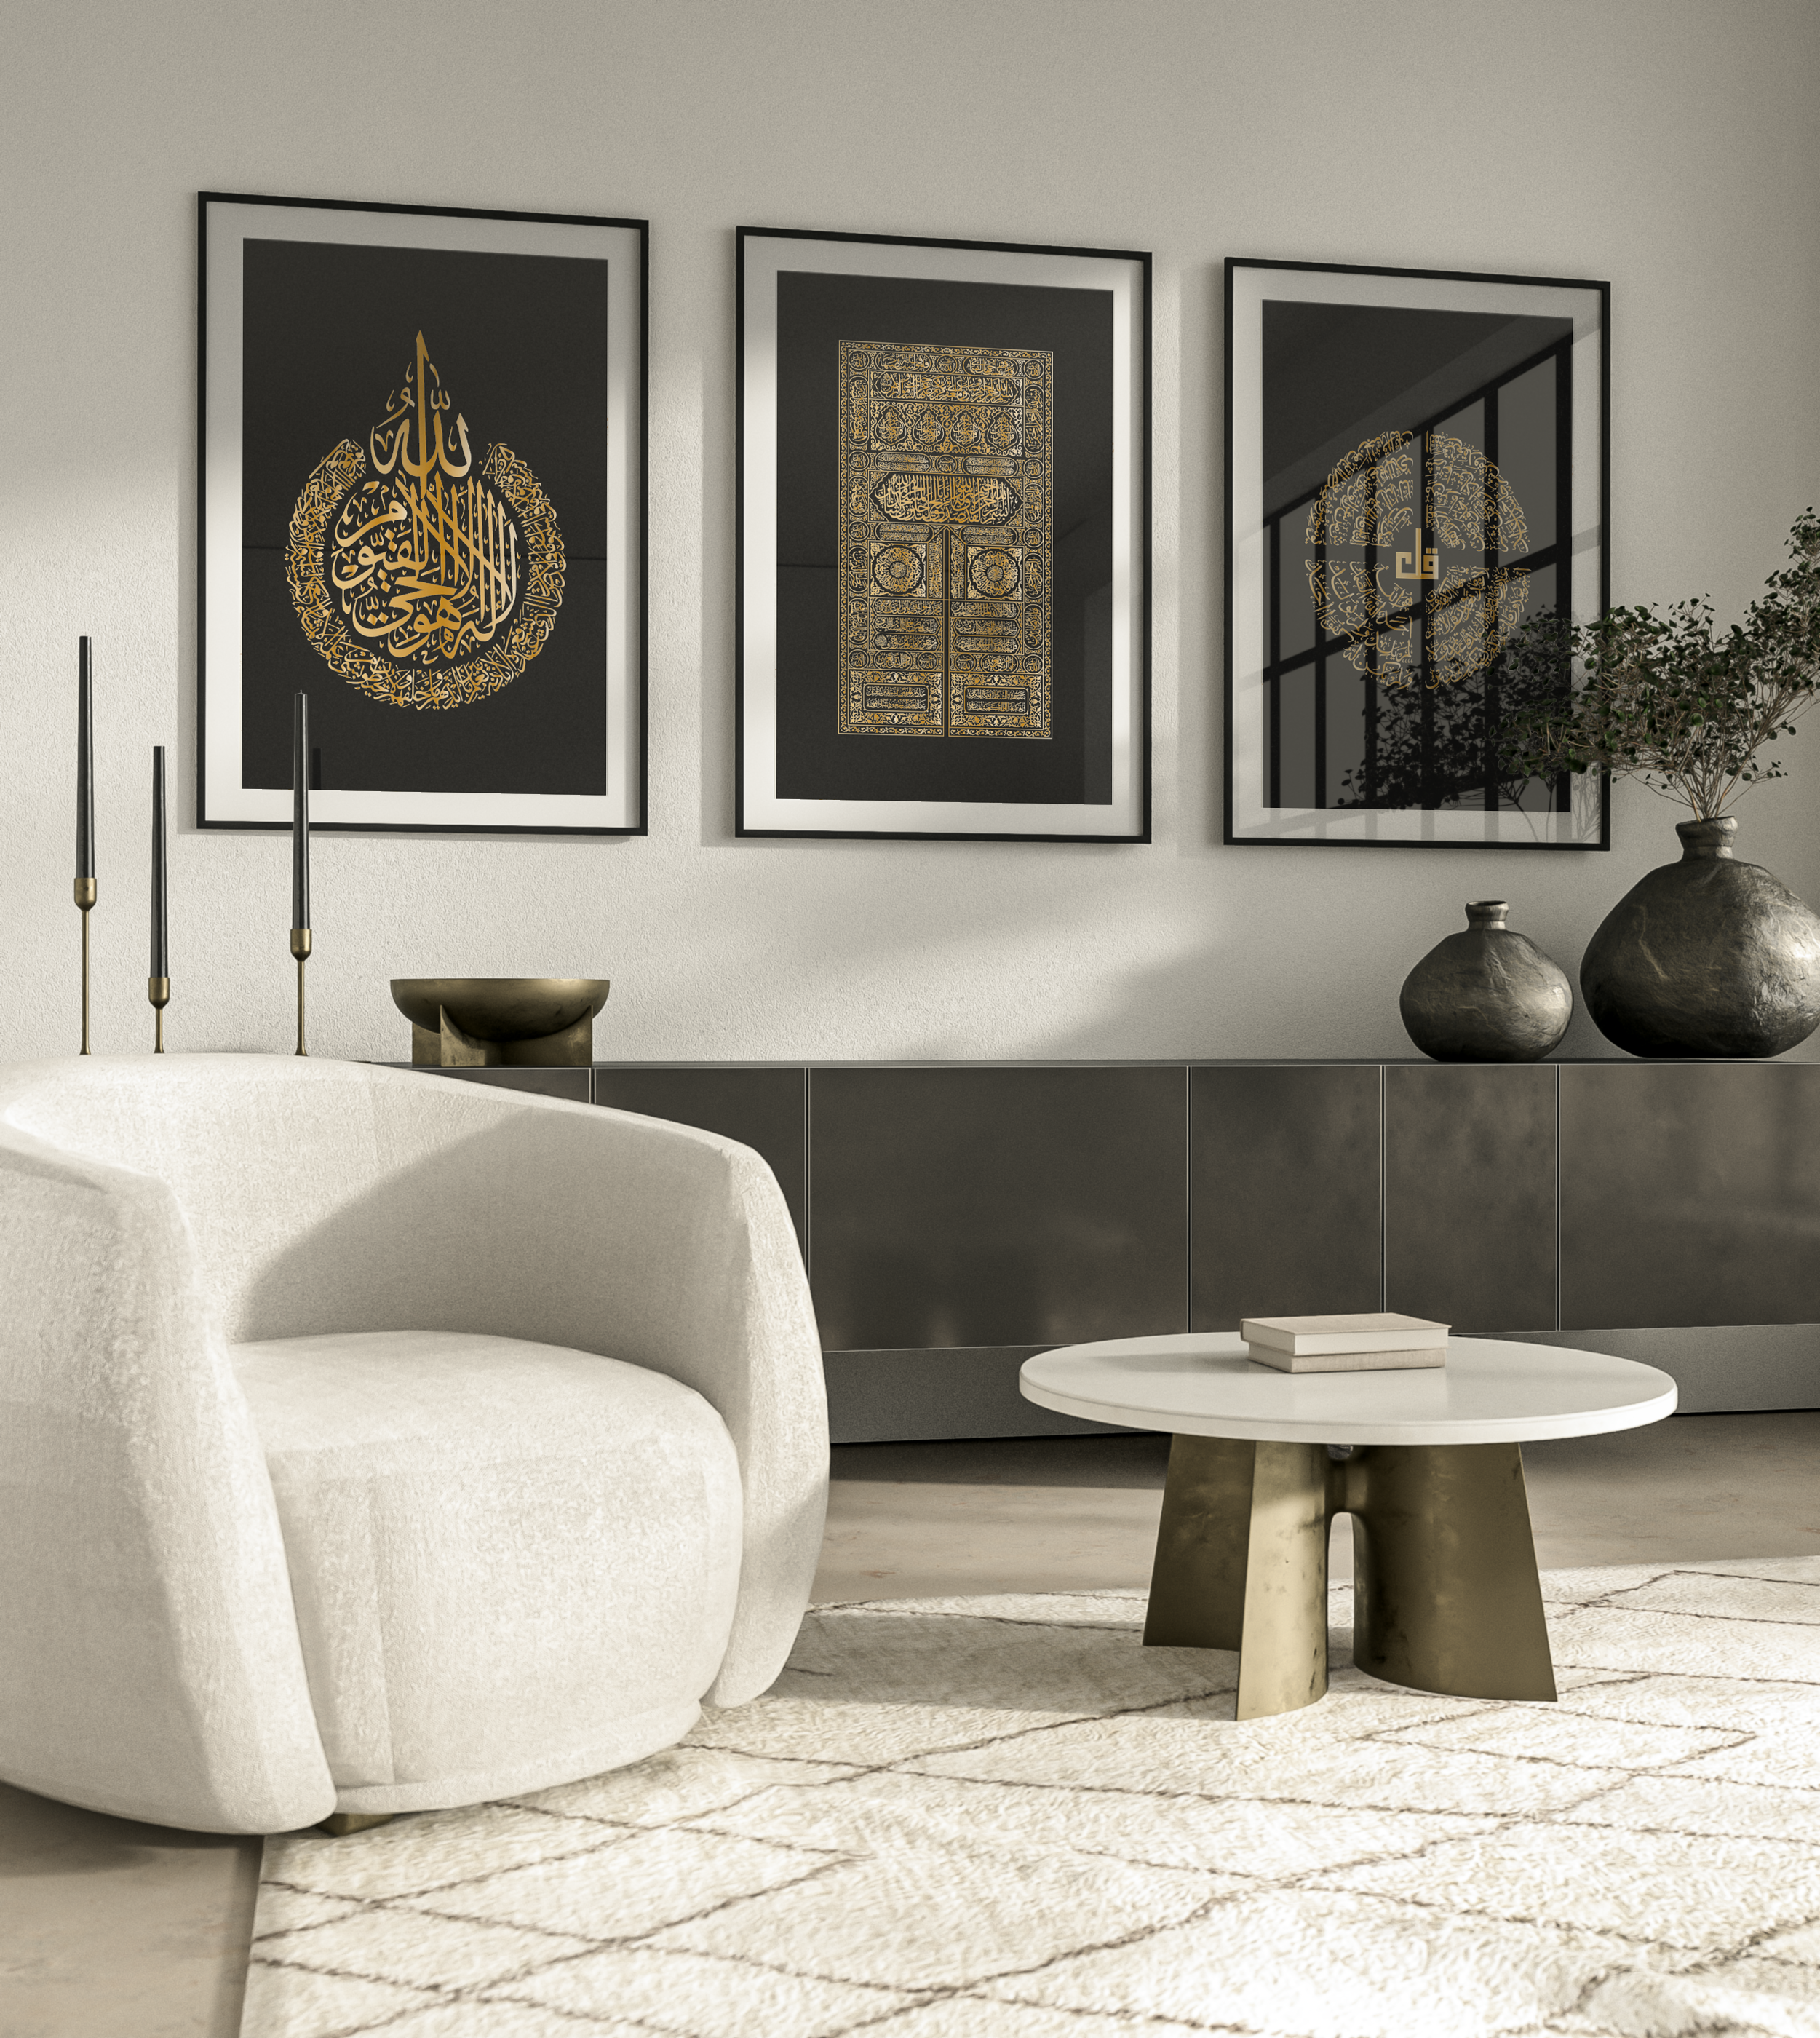 Ayatul Kursi, Kaaba Kiswa, 4 Quls in Black & Gold for Islamic Wall Art | Home Decor | Islamic Gifts